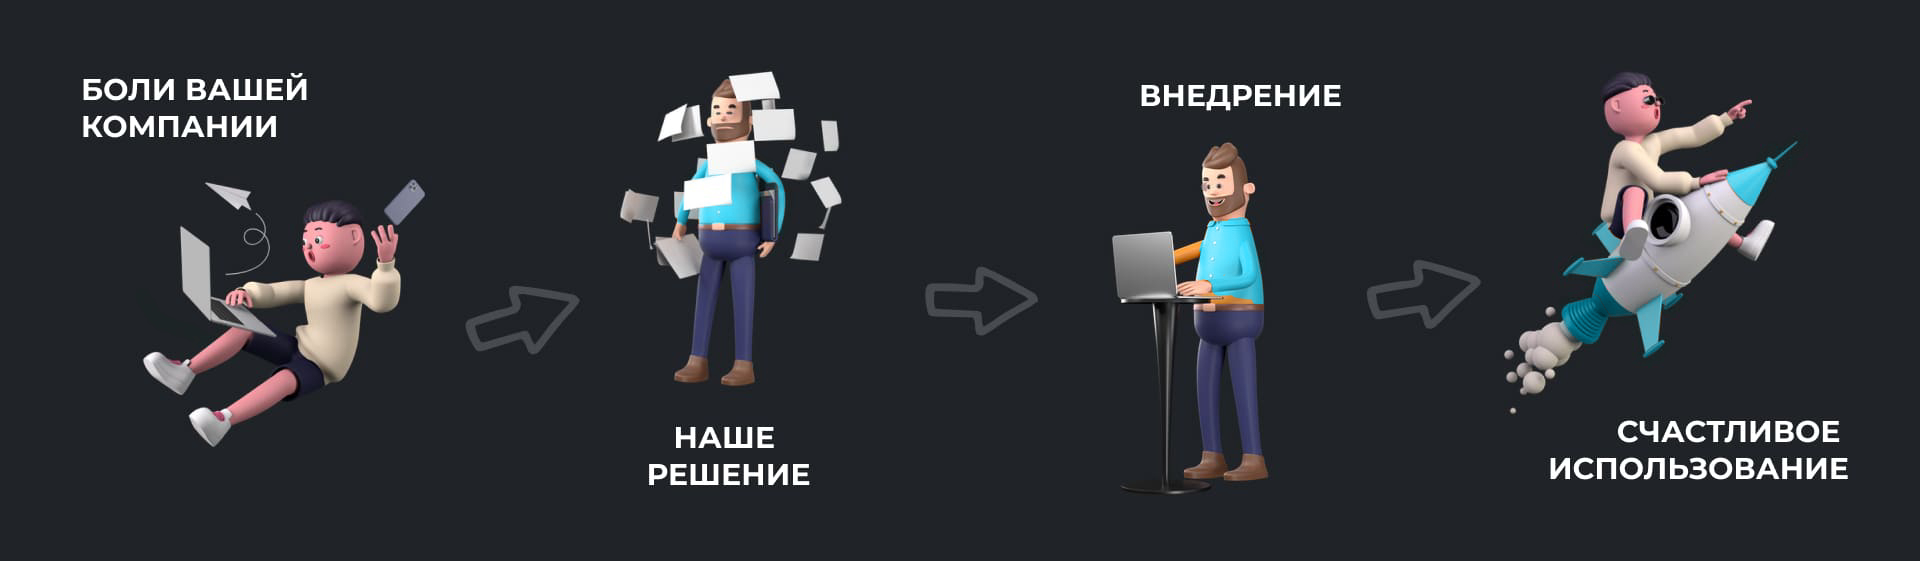 Схема сотрудничества компании Netori.ru